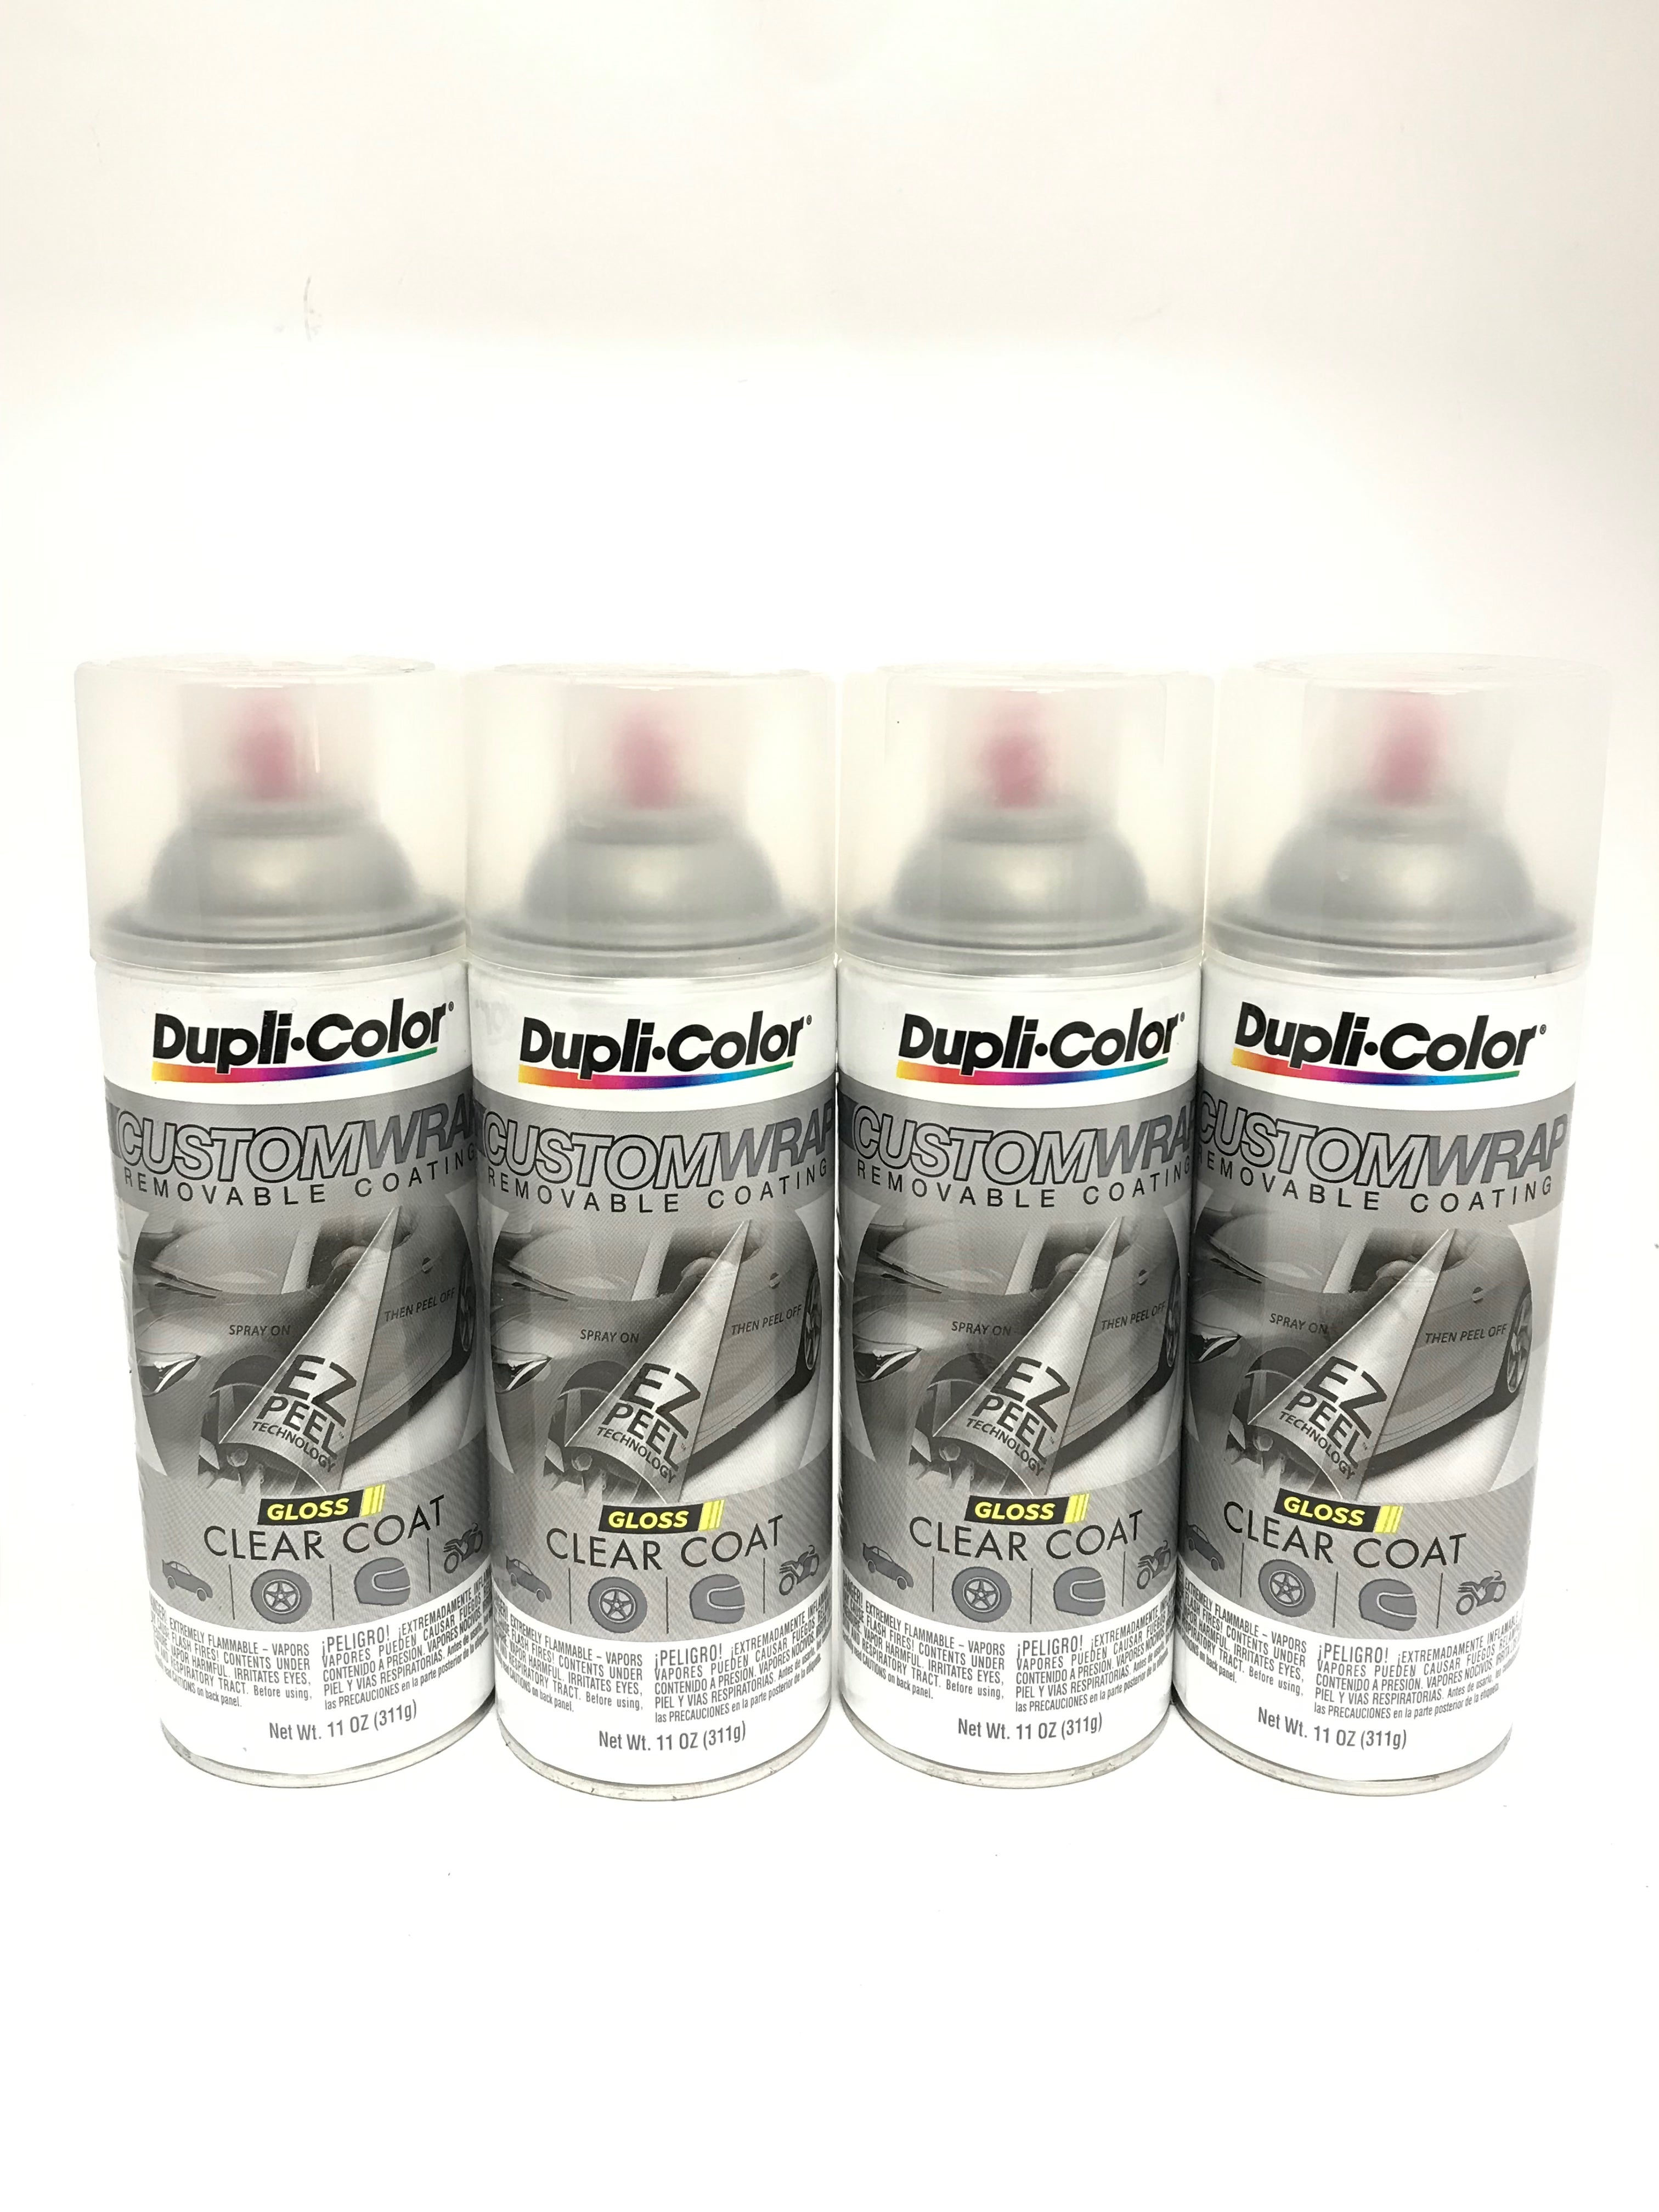 Dupli Color Instant Chrome Spray 11 oz. Aerosol